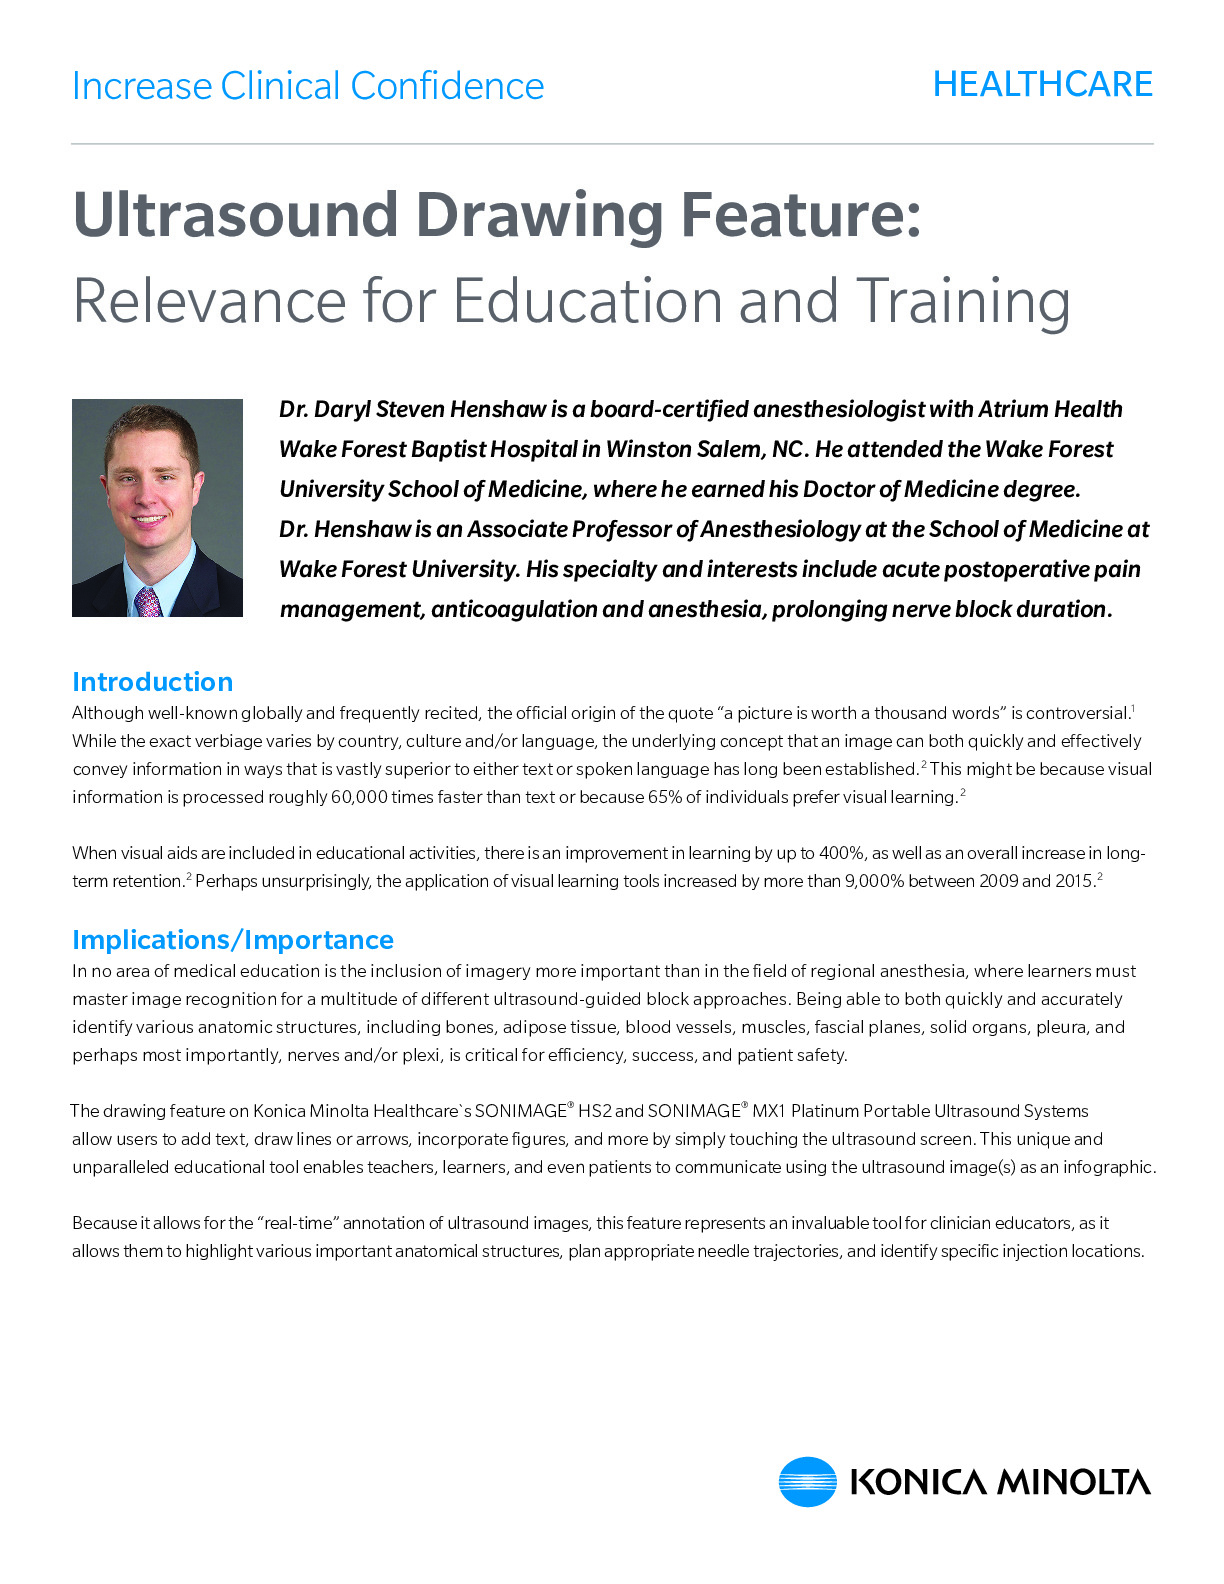 Ultrasound Education Training Case Study M2098 0123 RevA